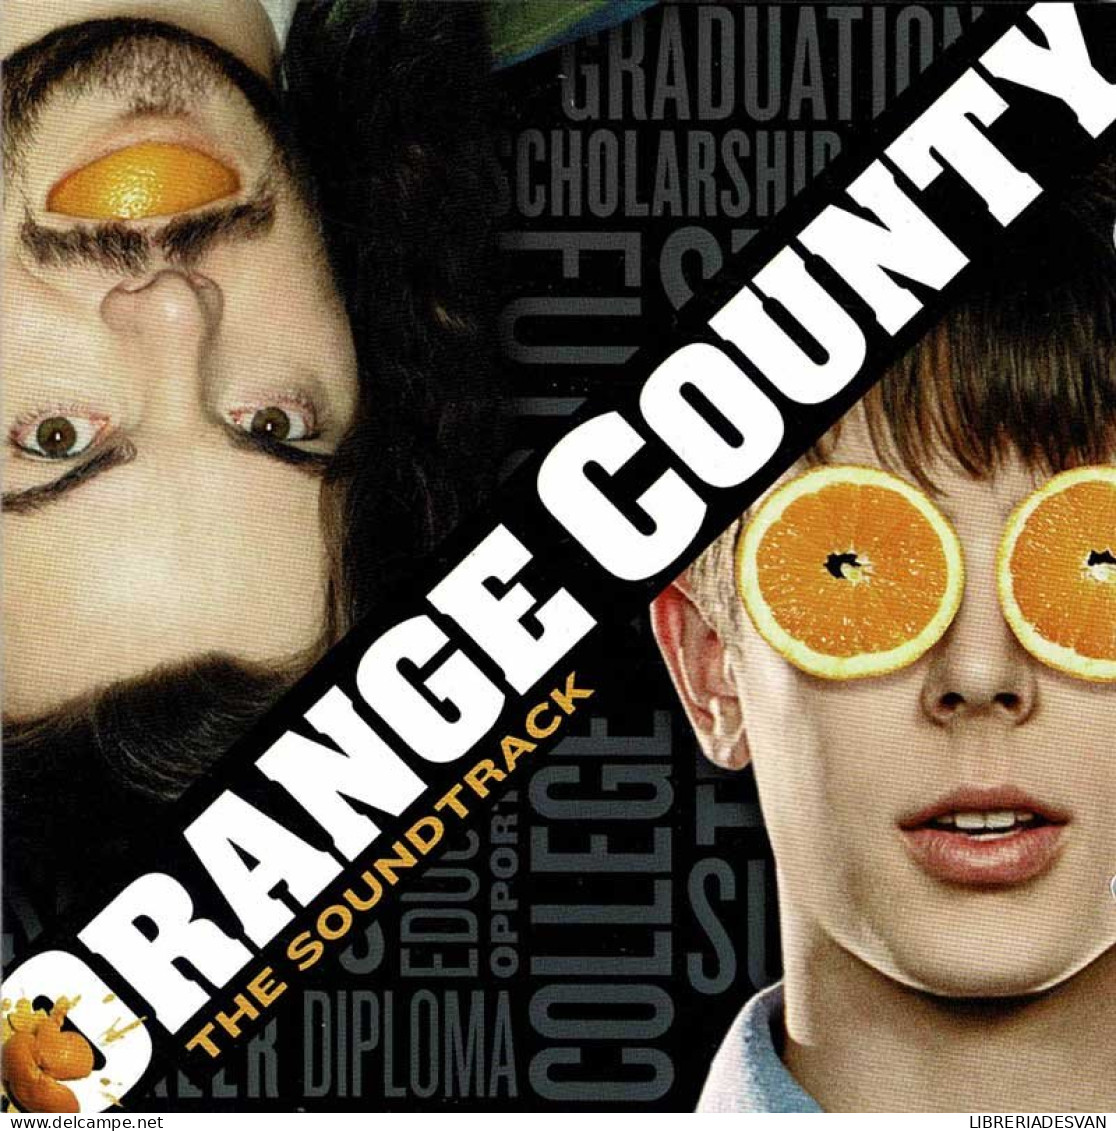 Orange County (The Soundtrack). CD - Filmmuziek